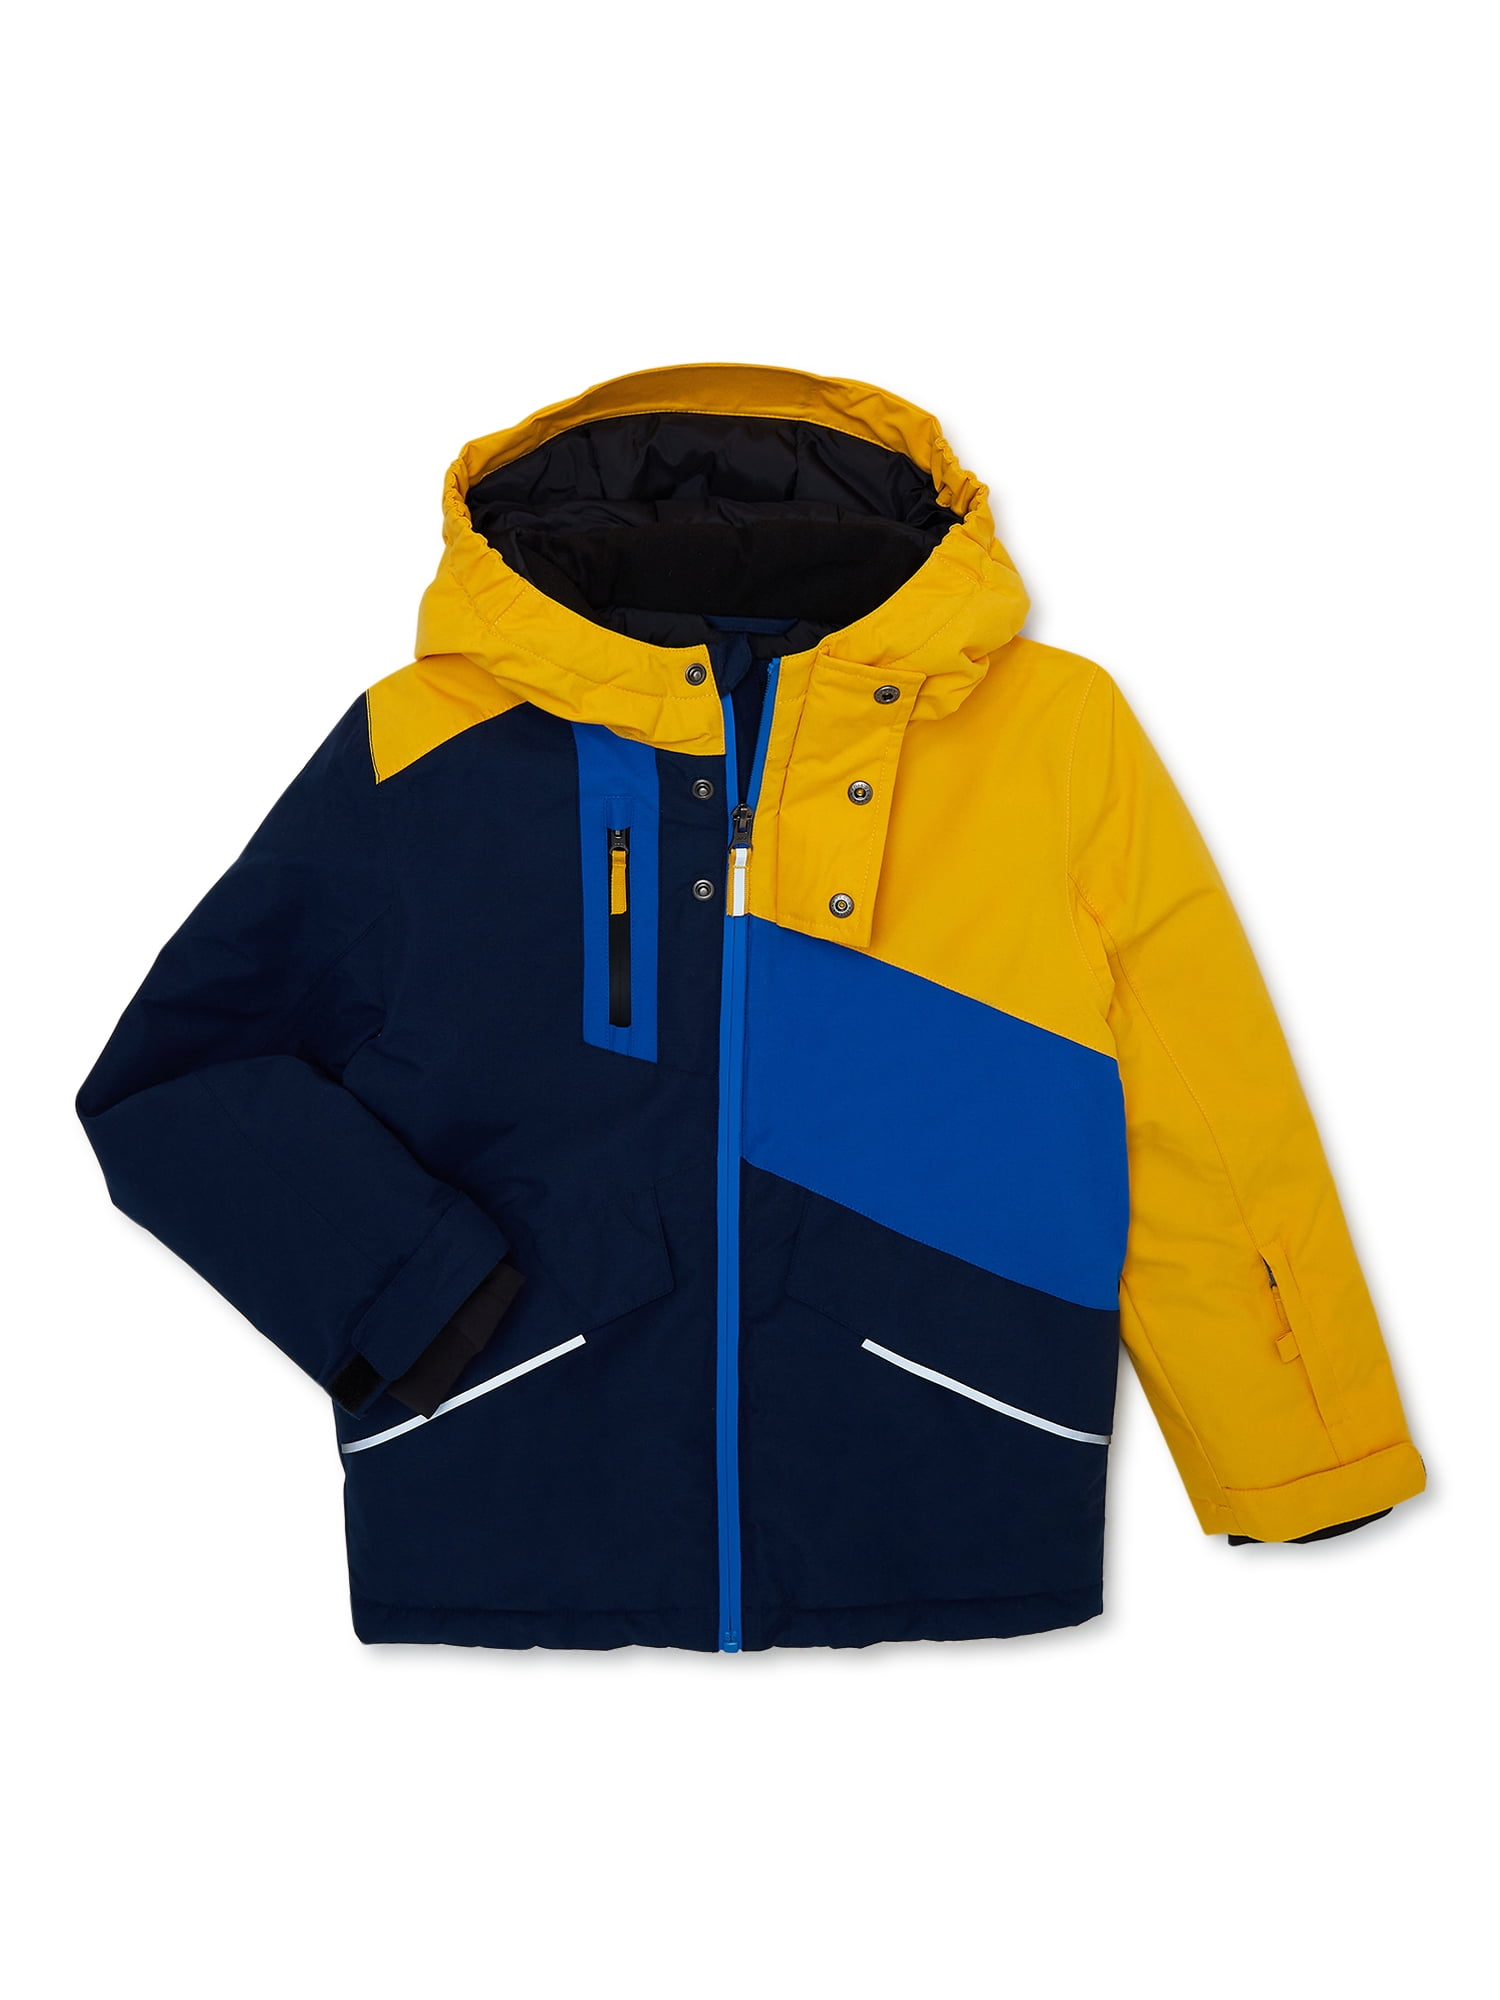 Swiss Tech Boys Waterproof Ski Jacket with Hood, Sizes 4-18